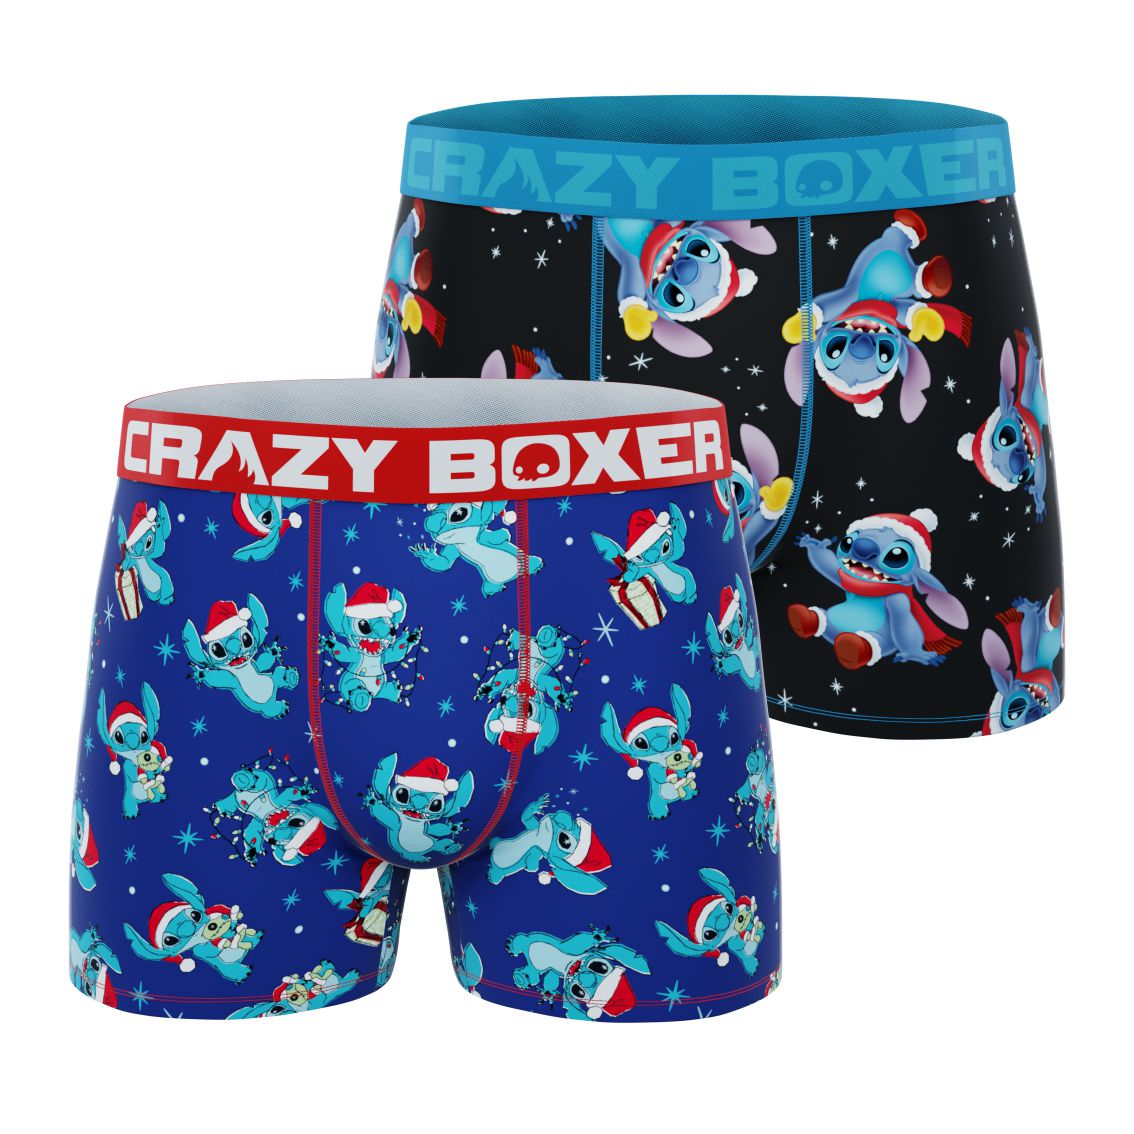 CRAZYBOXER Disney Lilo & Stitch Holidays Men's Boxer Briefs (2